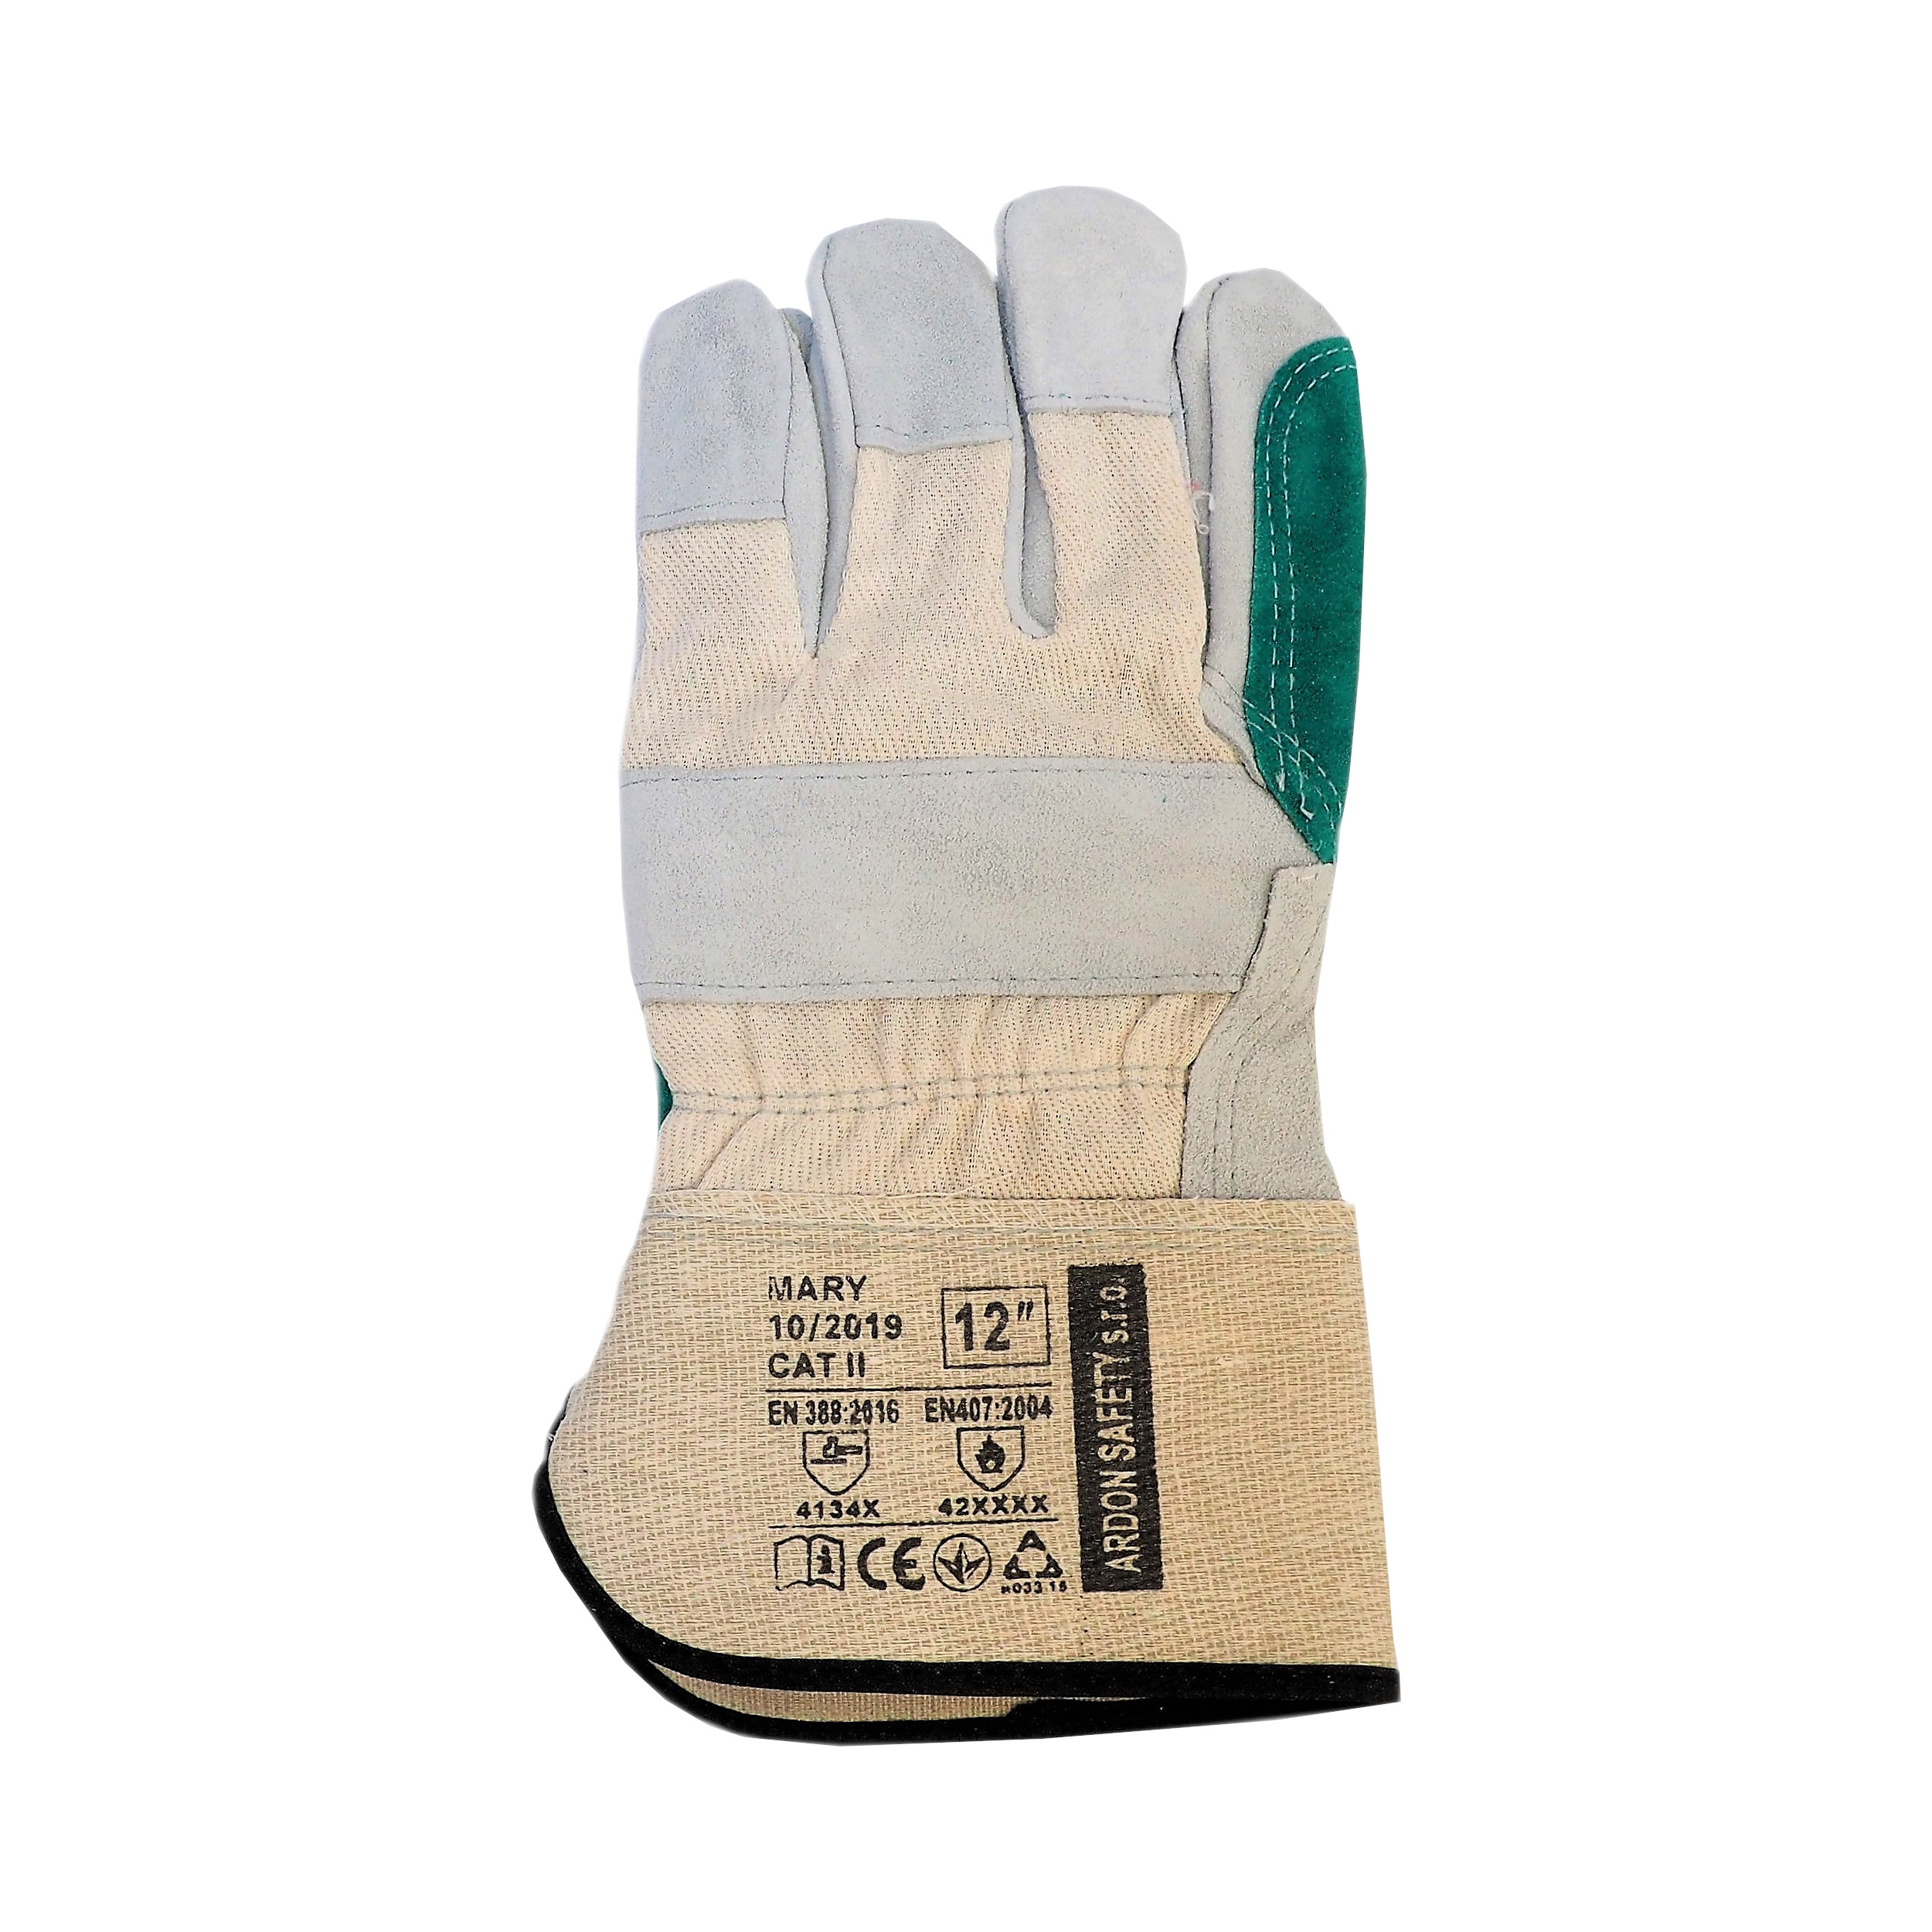 rukavice MARY, kožené, velikost 12 0.29 Kg TOP Sklad4 600128 25